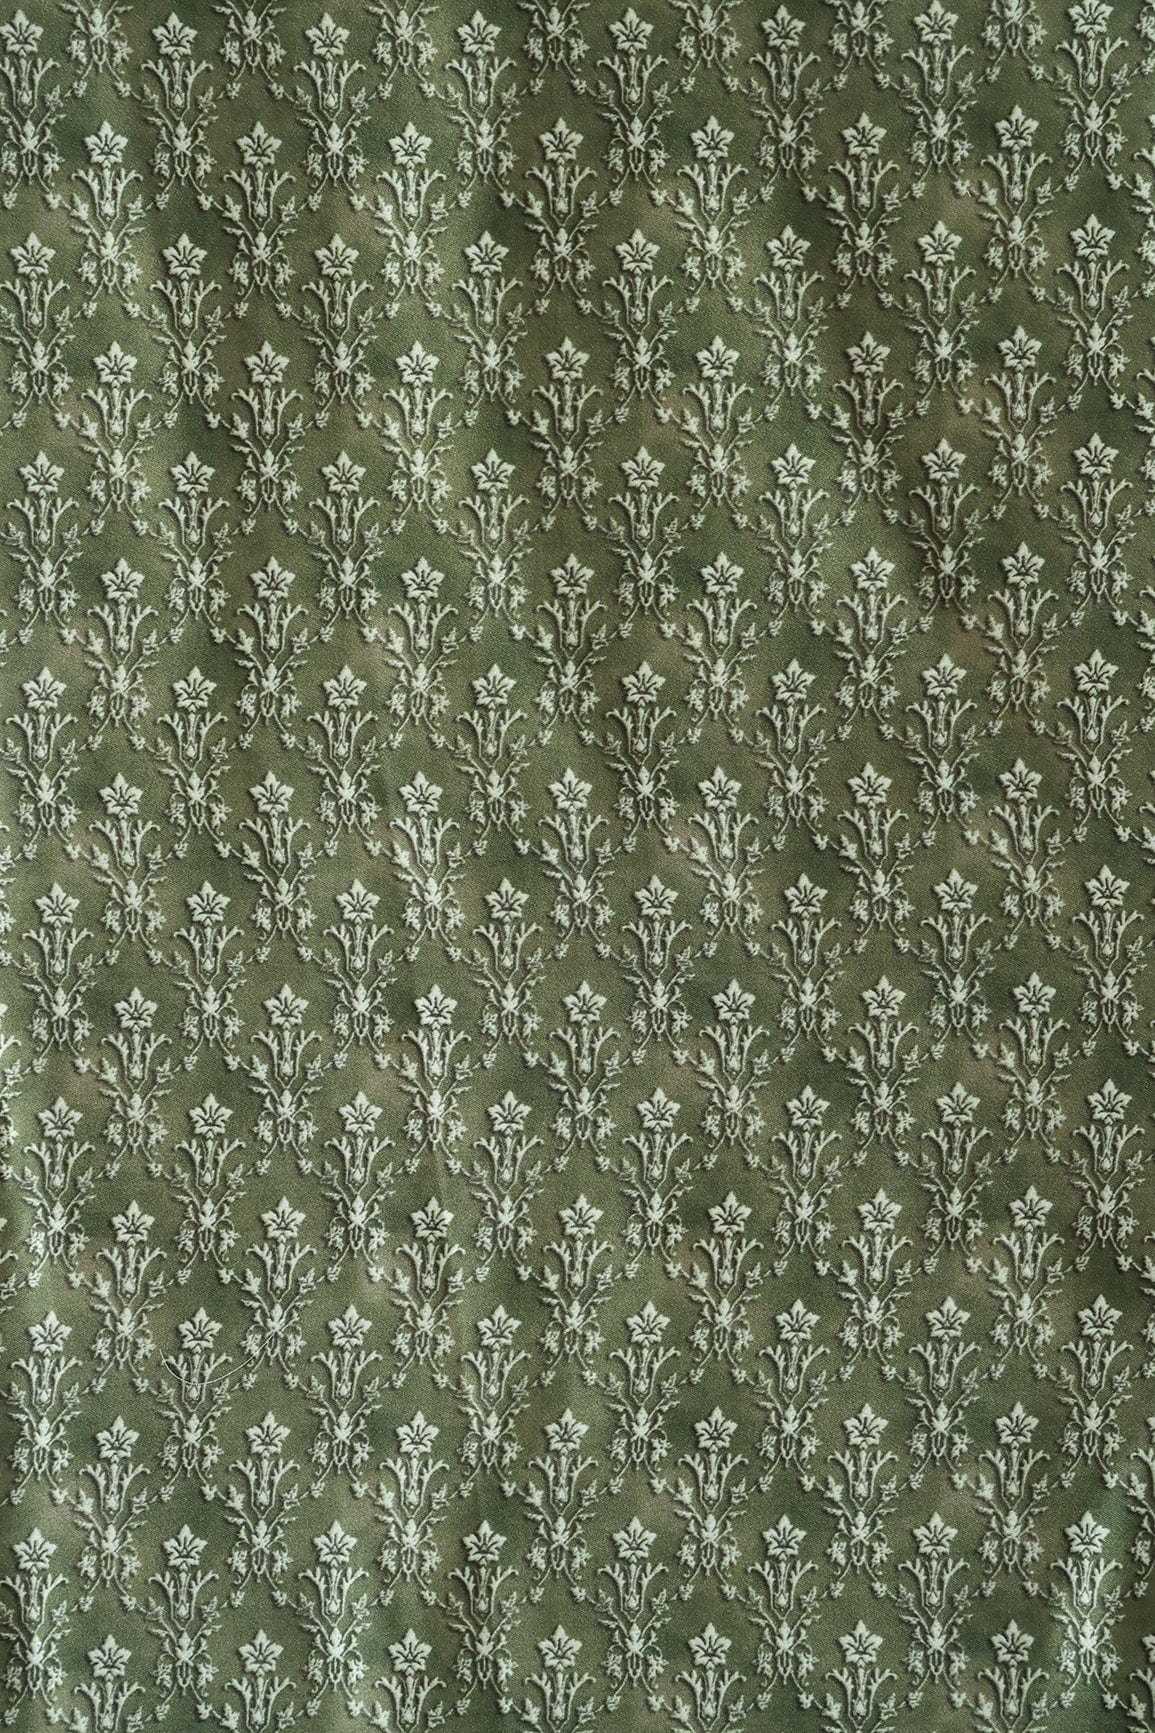 doeraa Prints Dark Olive Ethnic Pattern Digital Print On Satin Fabric